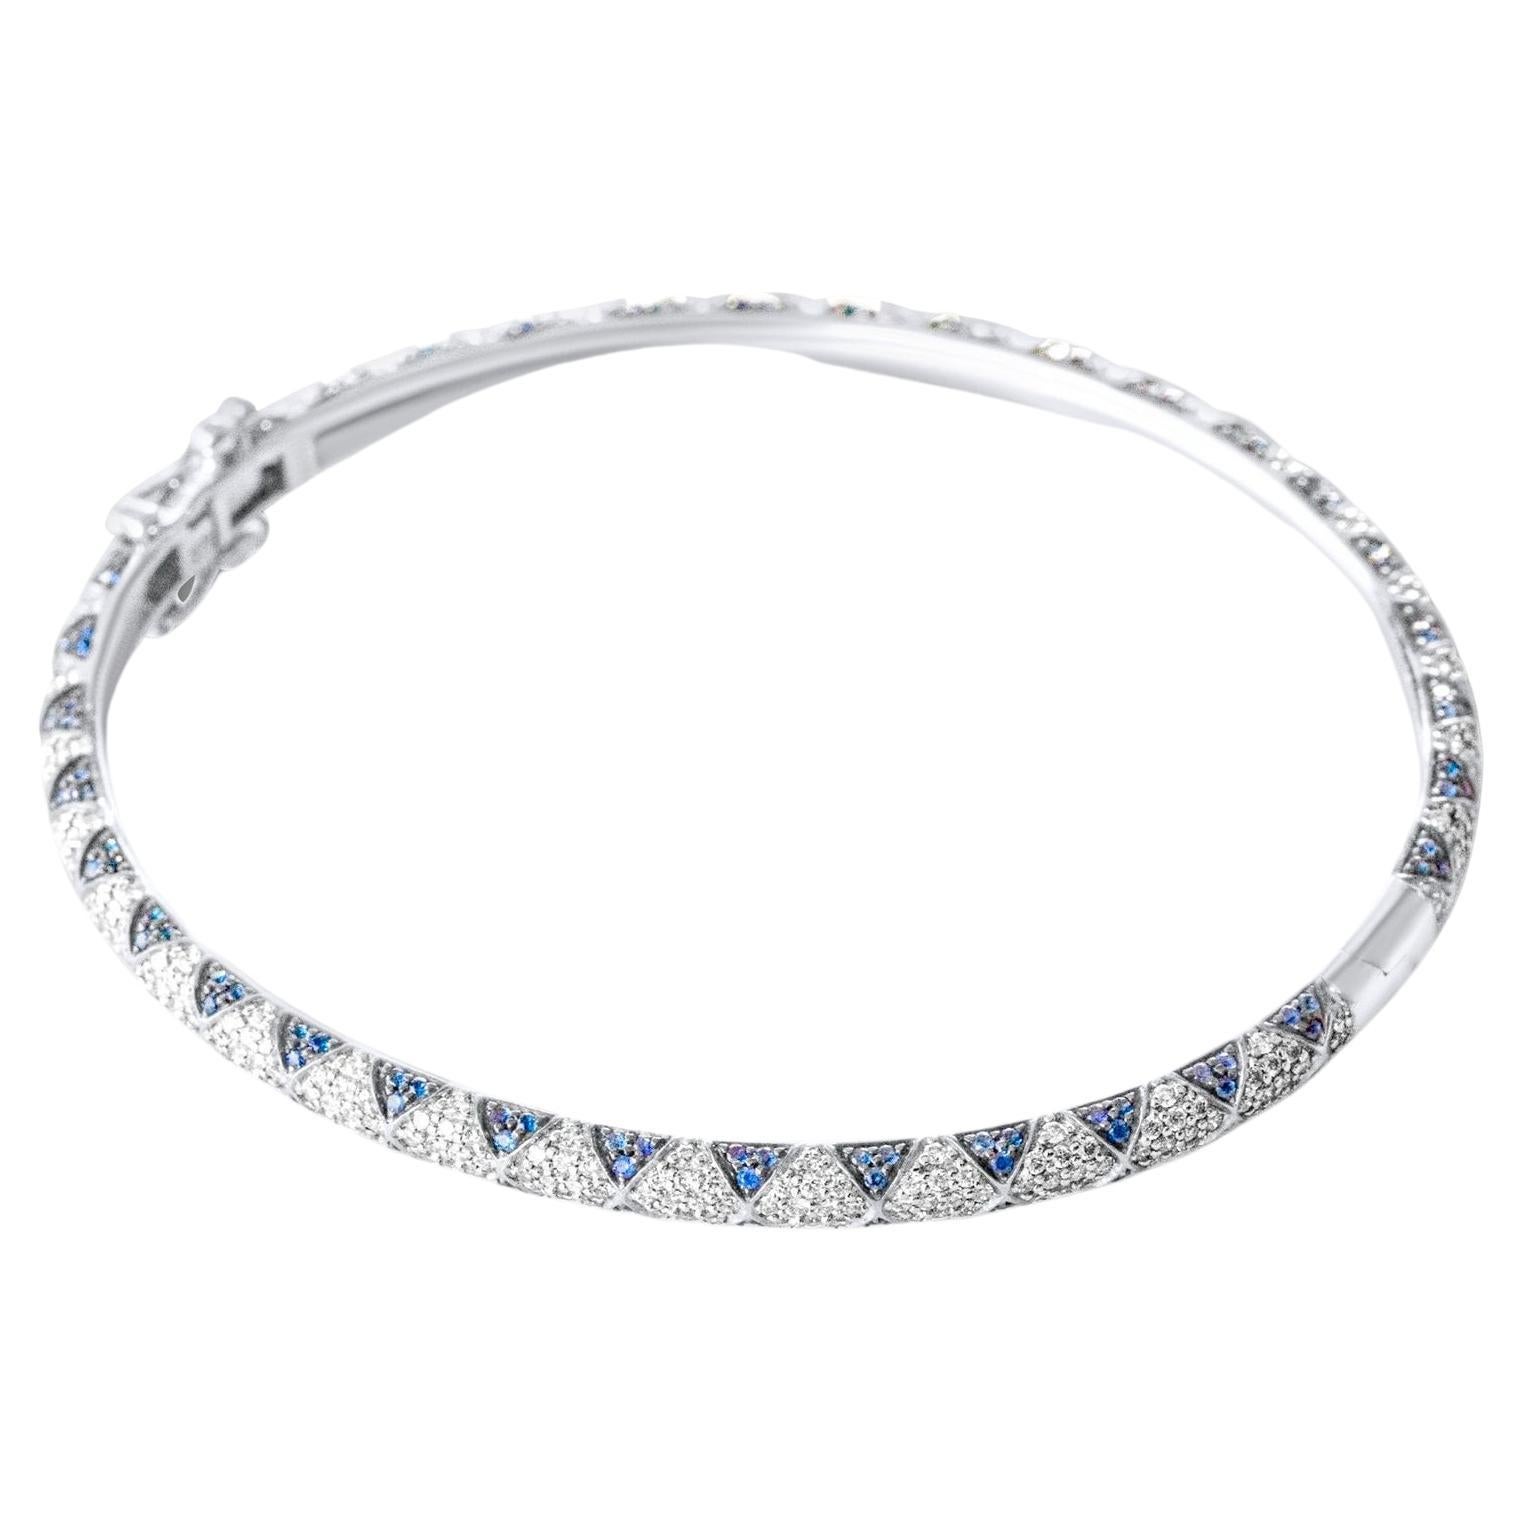 Lotus Bangle Bracelet with Sapphire Petals and Pave Diamonds, All Around